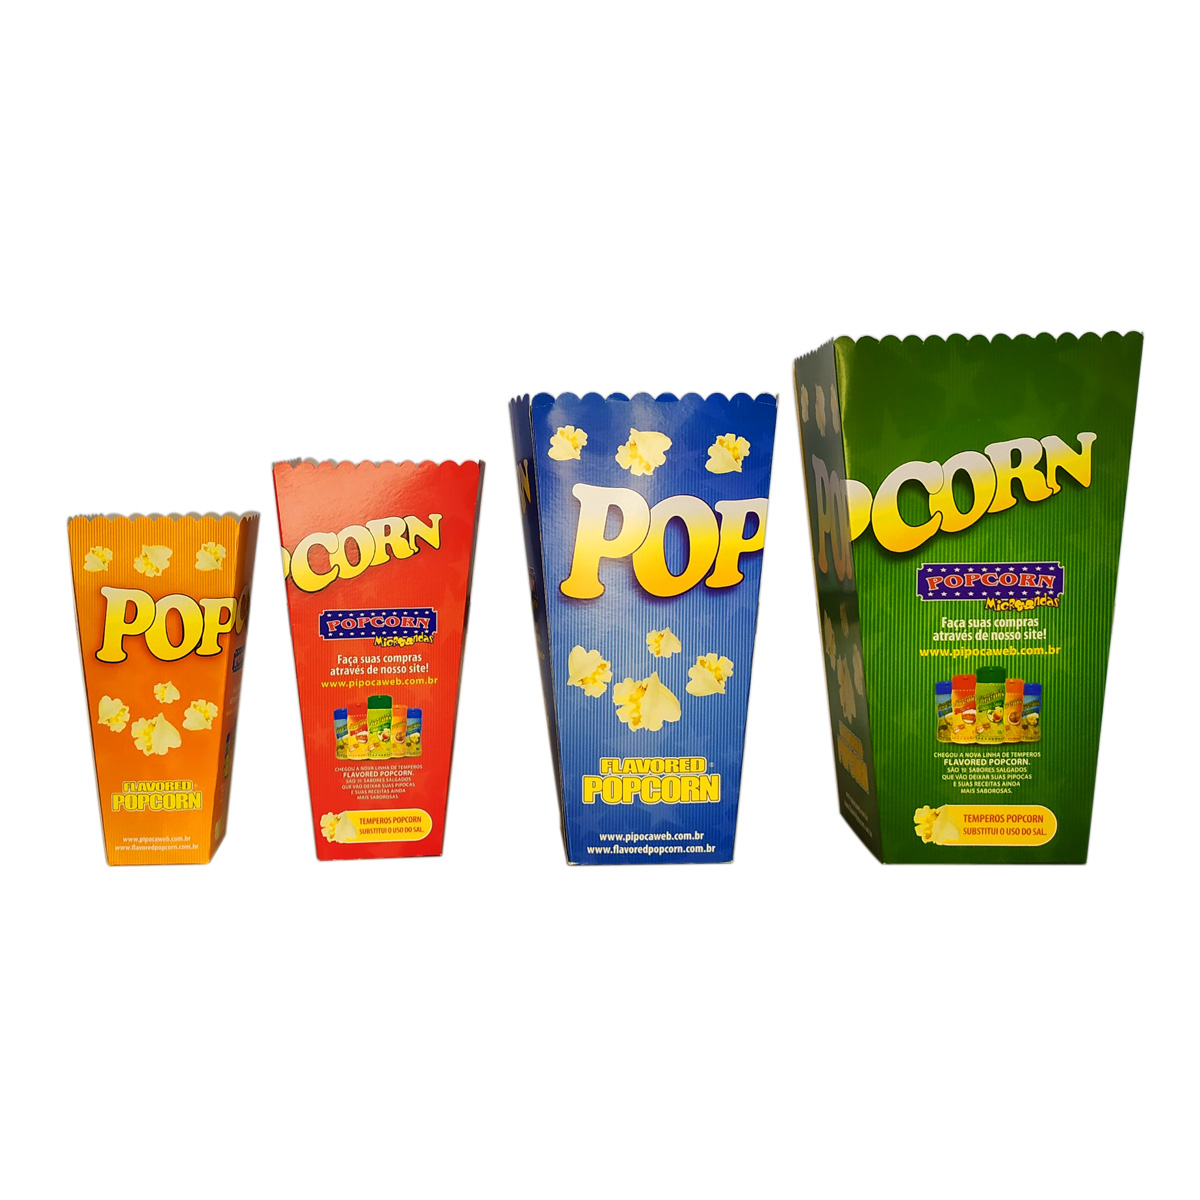 Embalagem Popcorn Caixinha Box - POP (M)